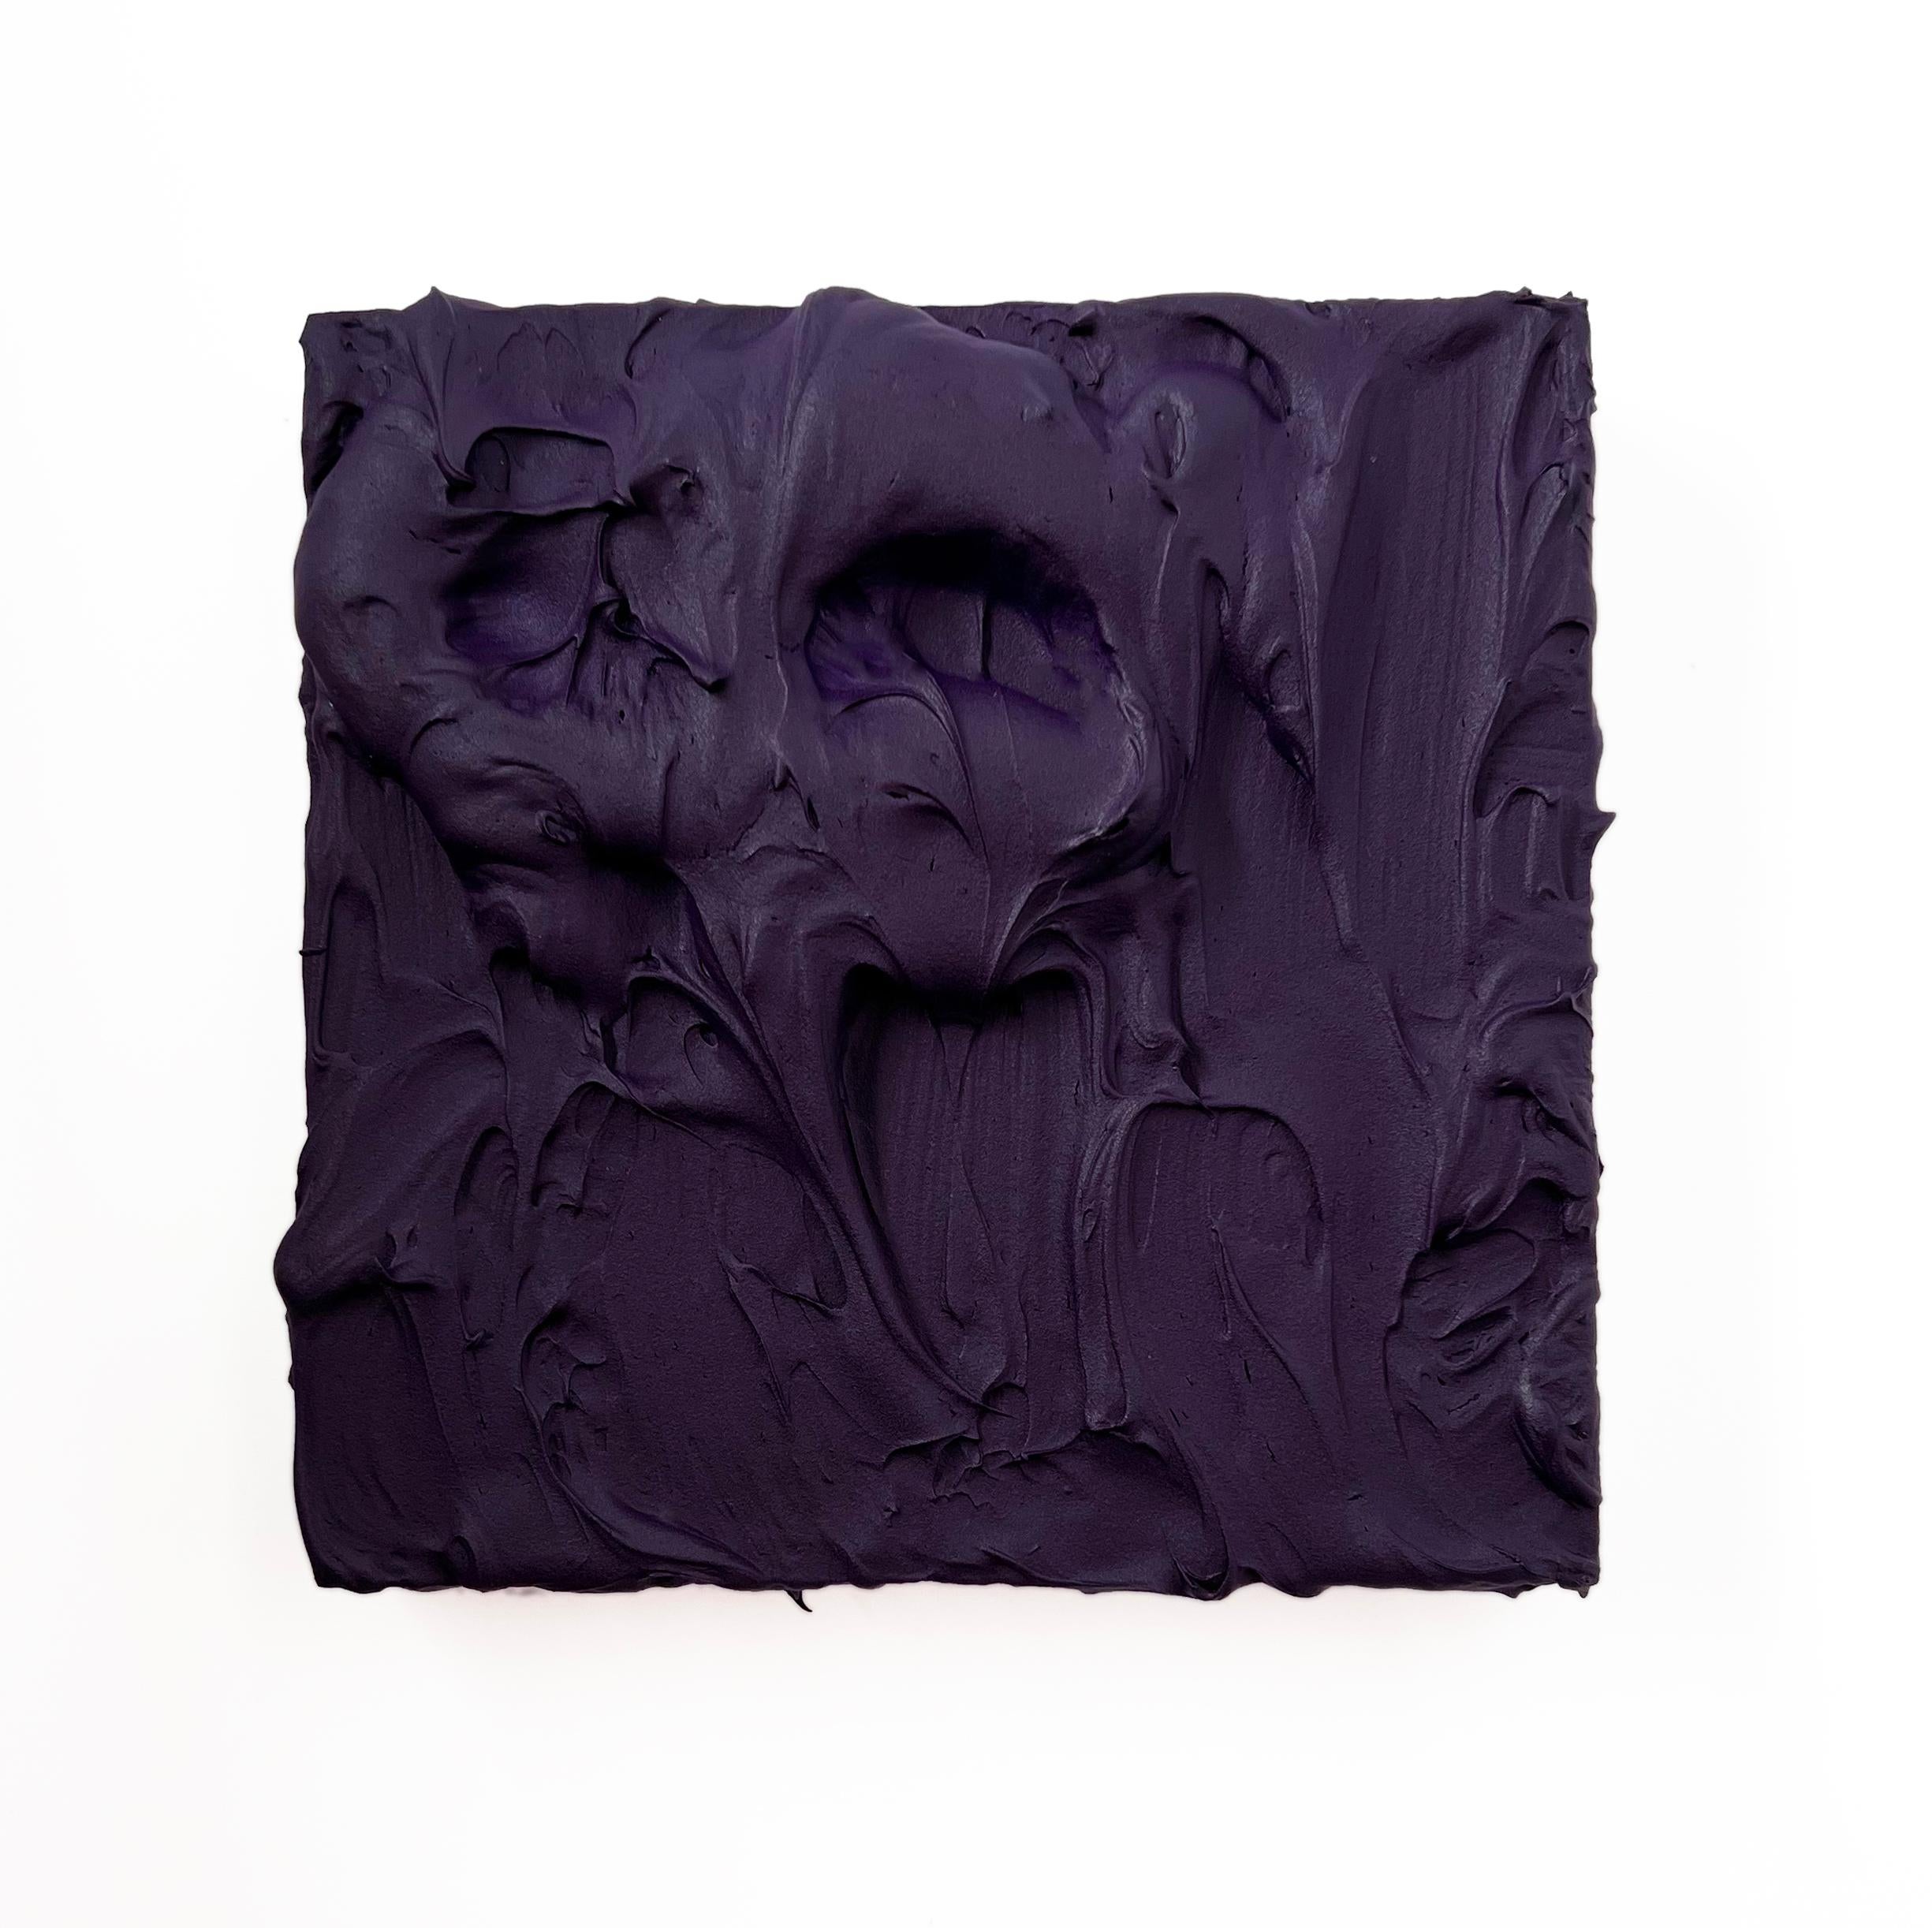 Royal Purple Excess (thick impasto painting monochrome Pop-Art quadratisches Design)